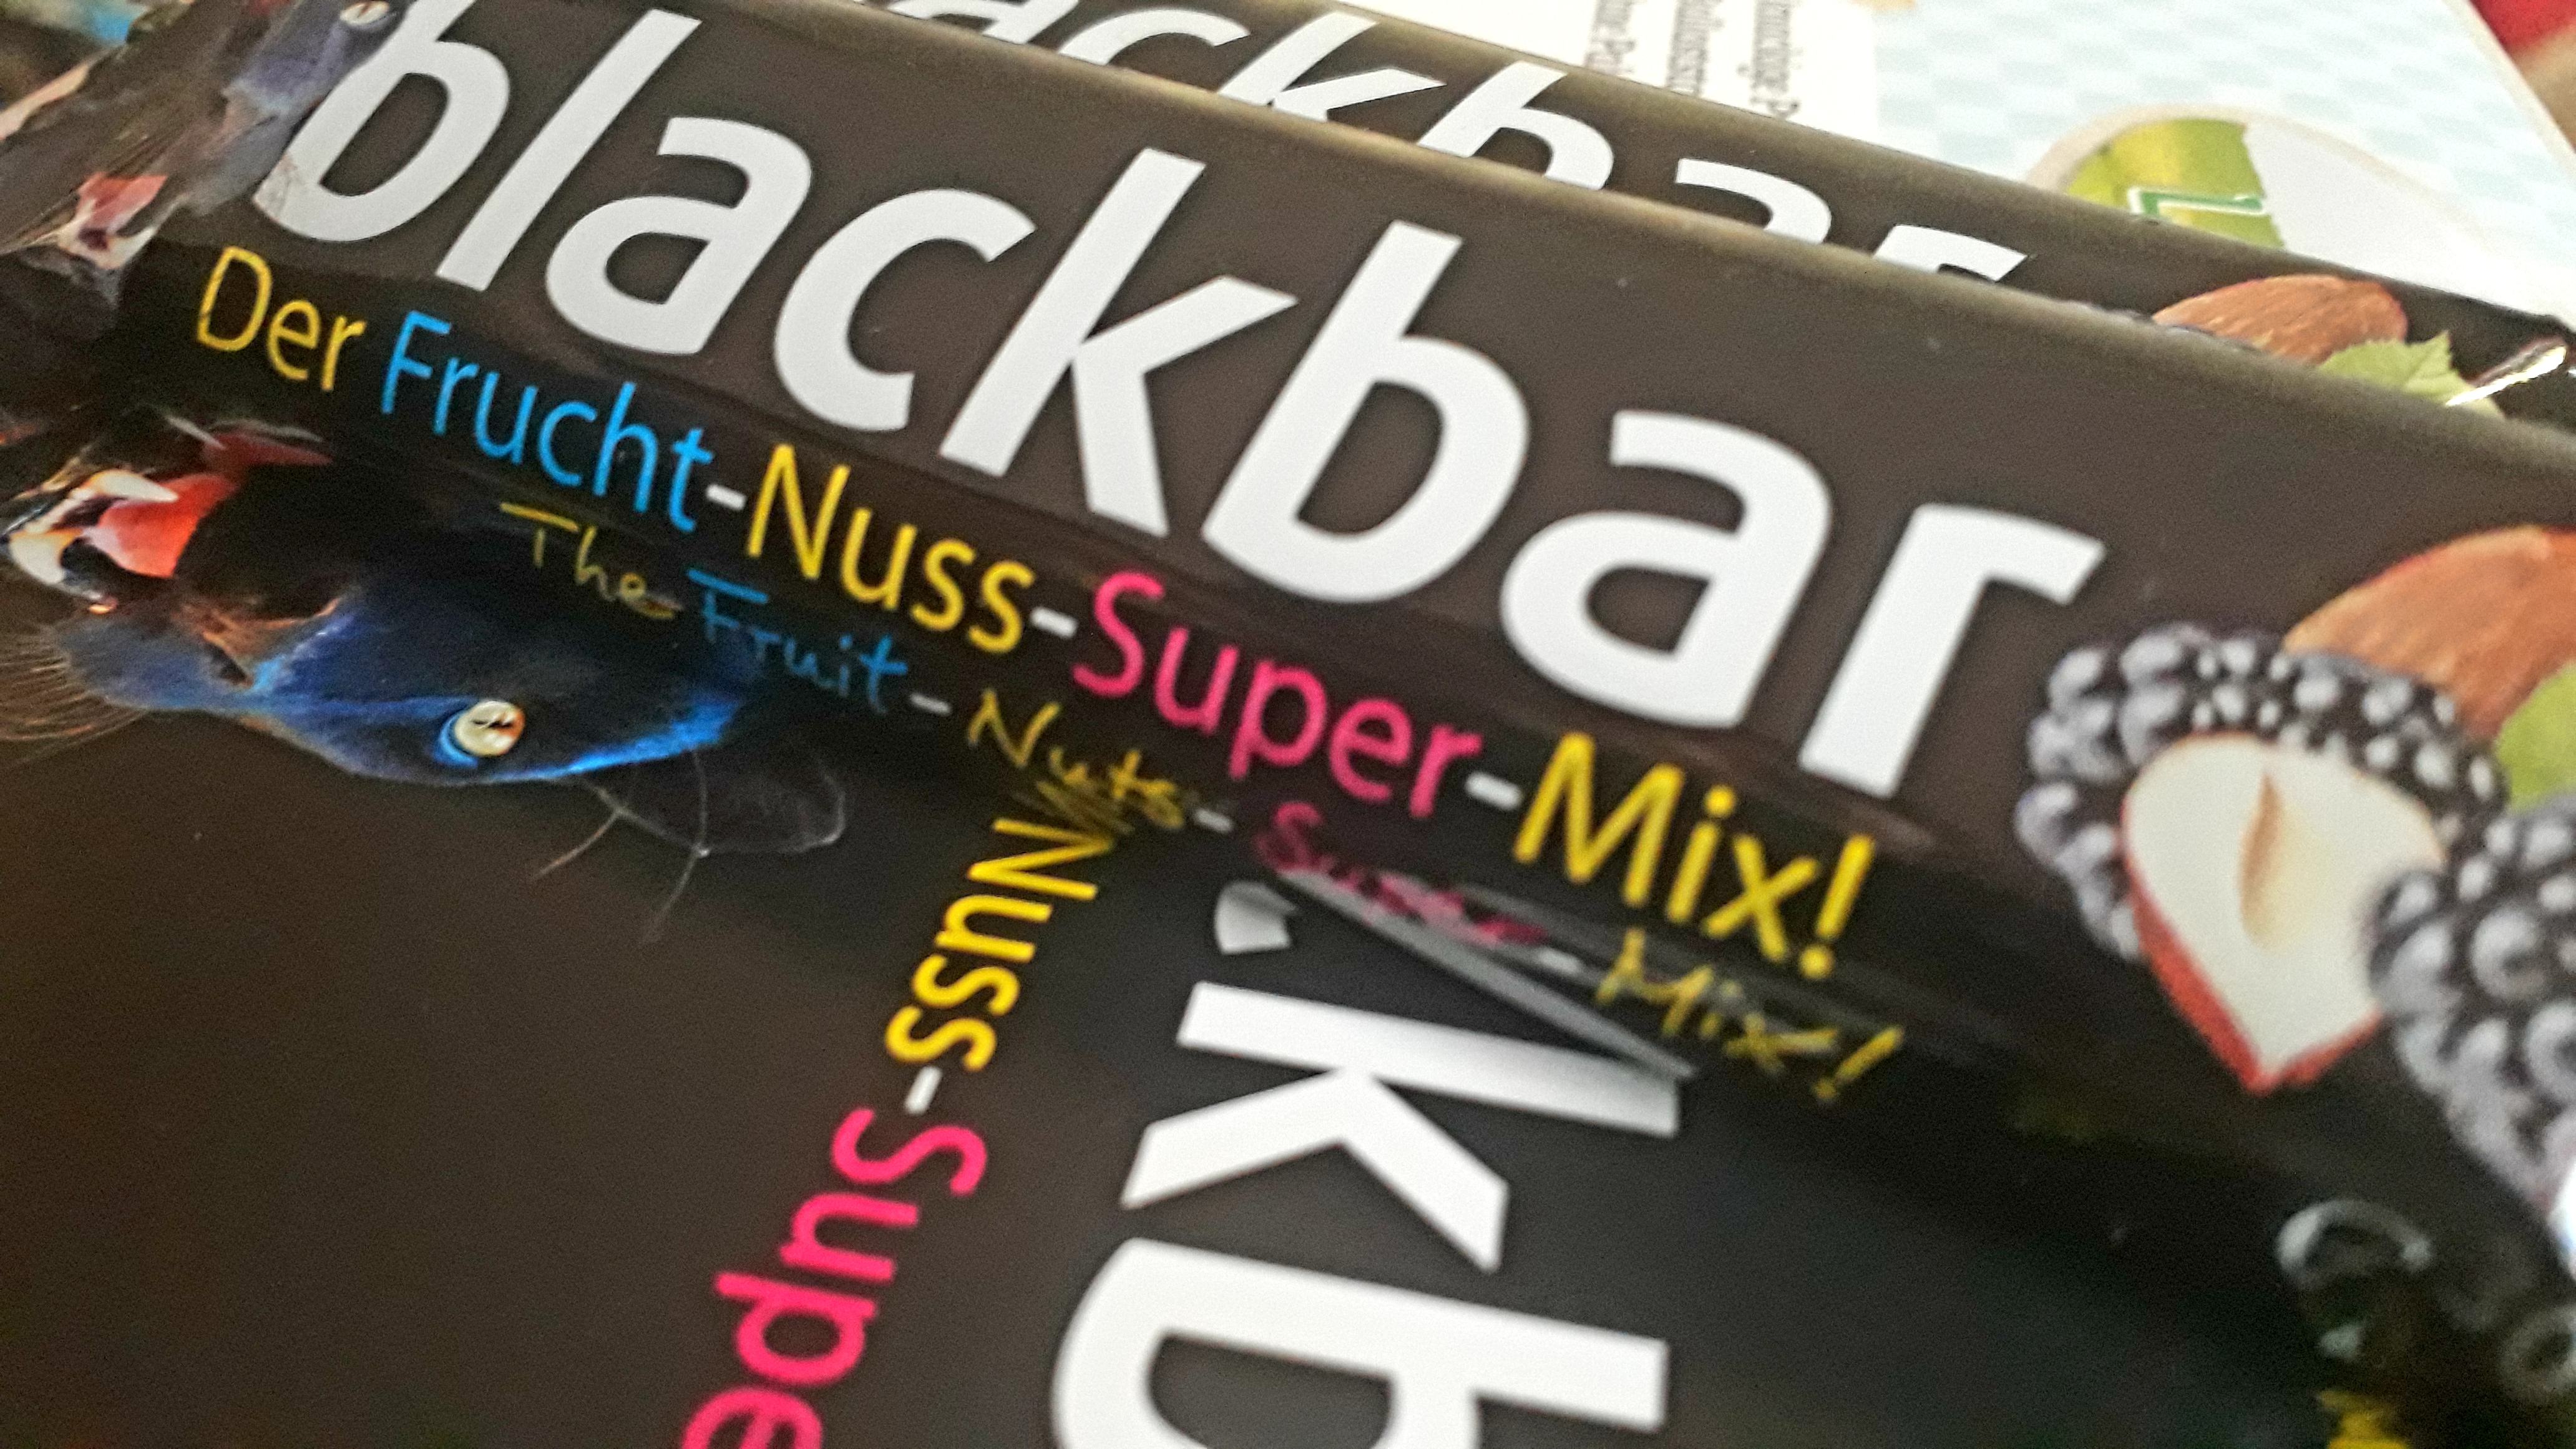 blackbar - Der Frucht-Nuss-Super-Mix!